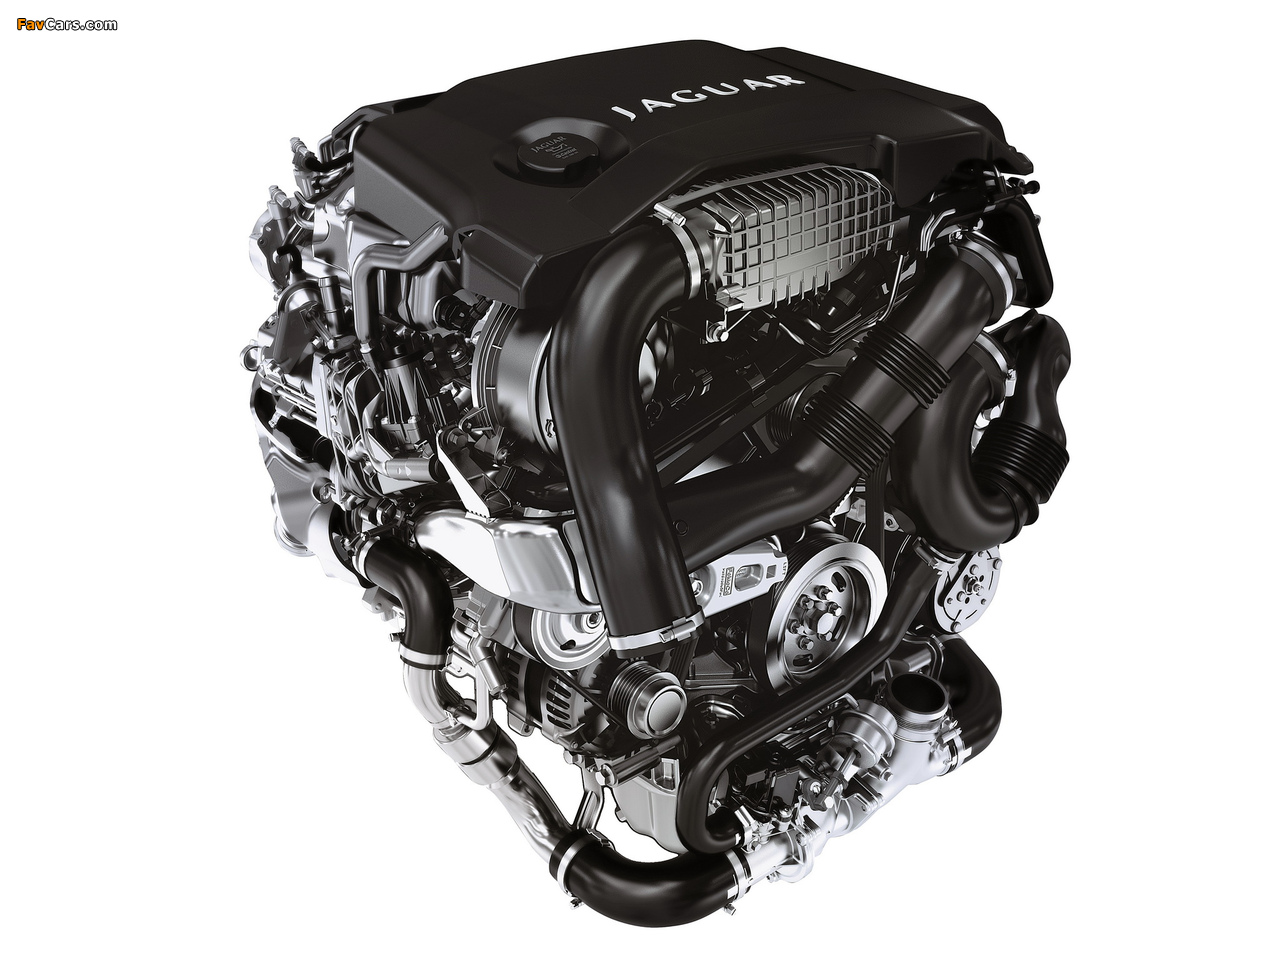 Pictures of Engines  Jaguar 3.0L V6 Supercharged (380 hp) (1280 x 960)